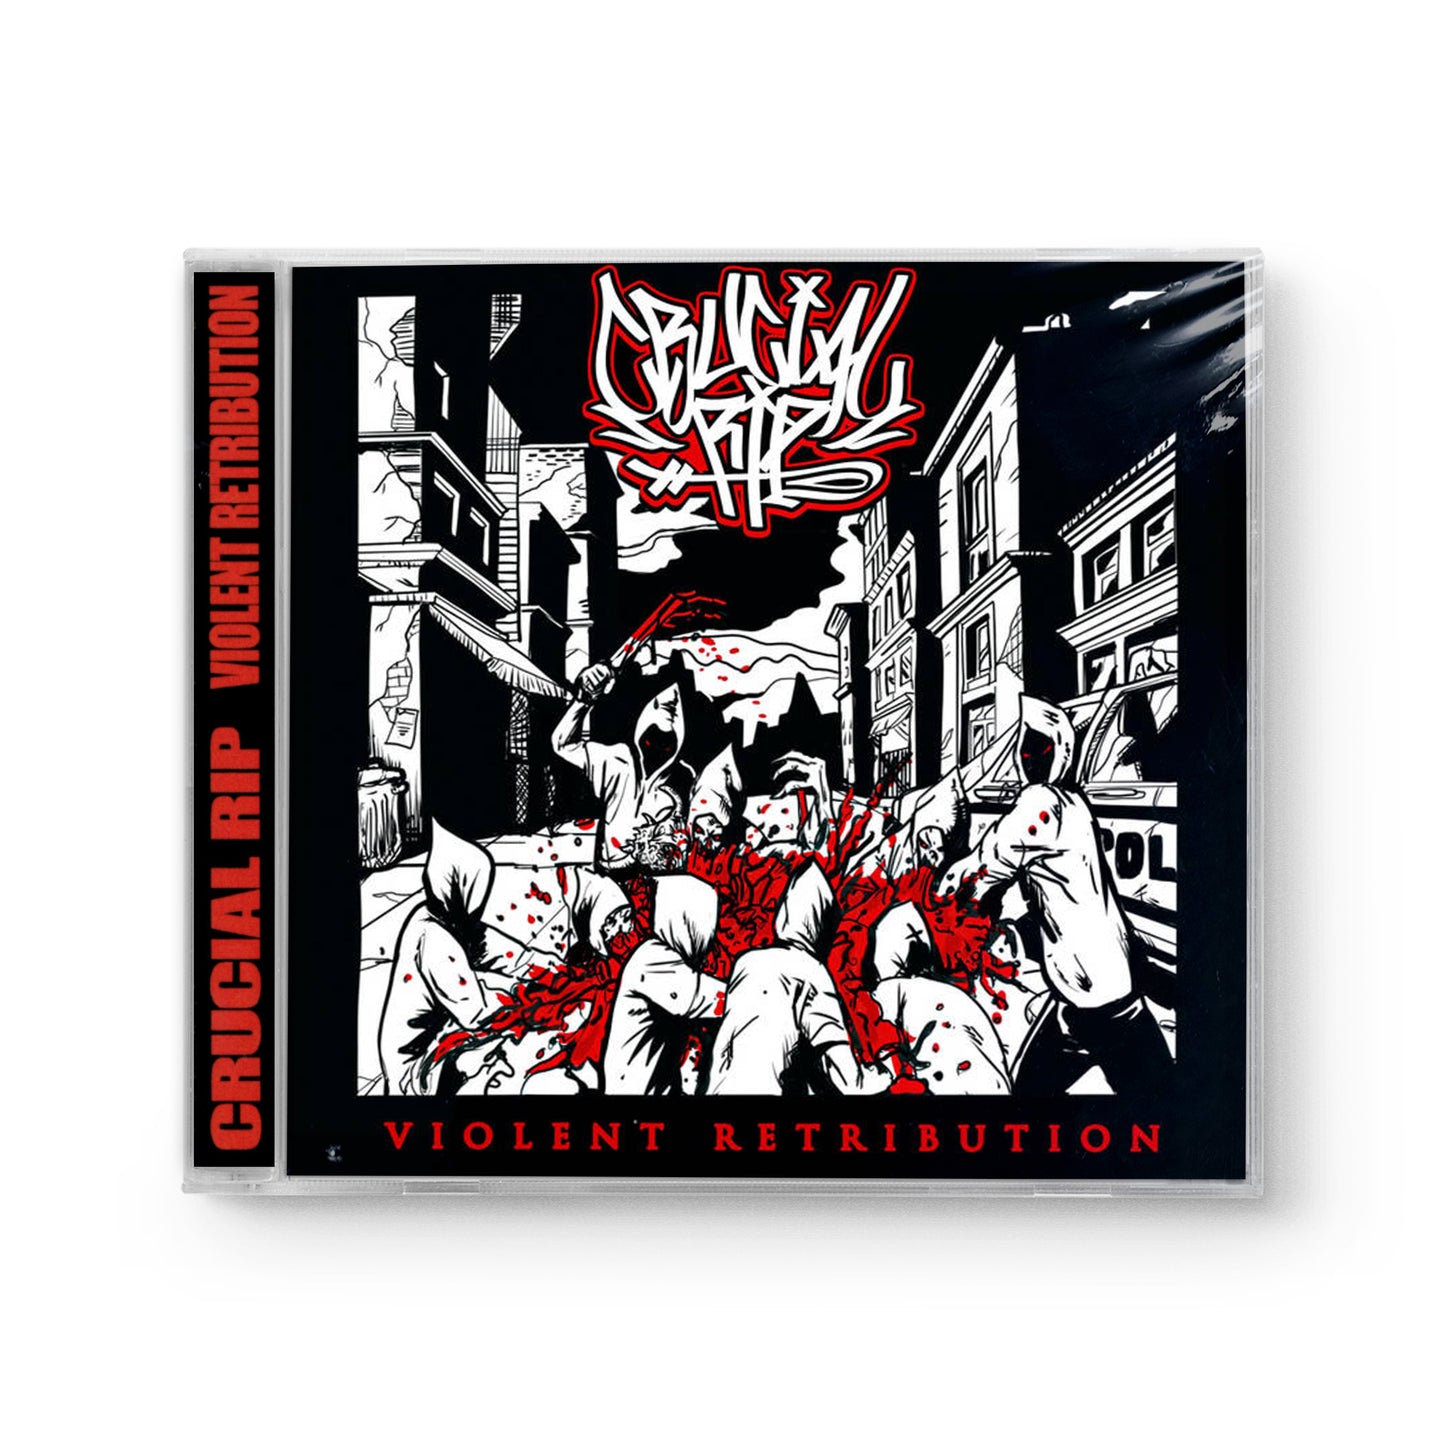 Crucial Rip "Violent Retribution" CD